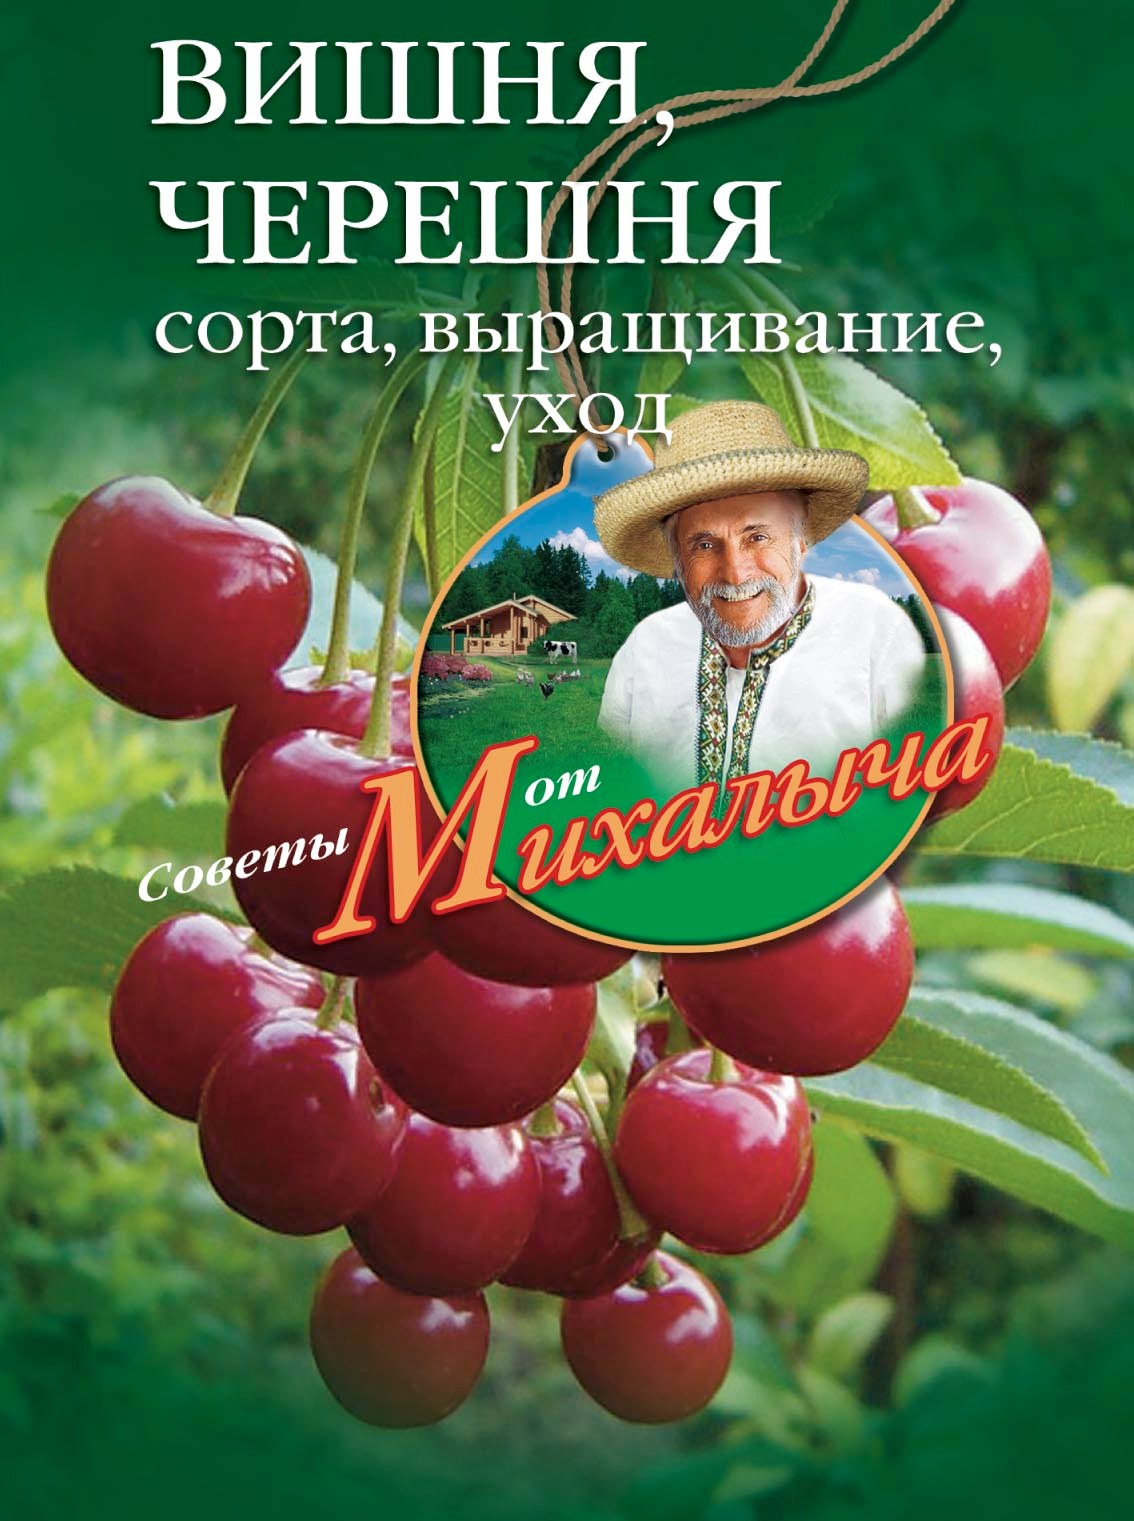 Николай Звонарев - «Вишня, черешня. Сорта, выращивание, уход, заготовки»